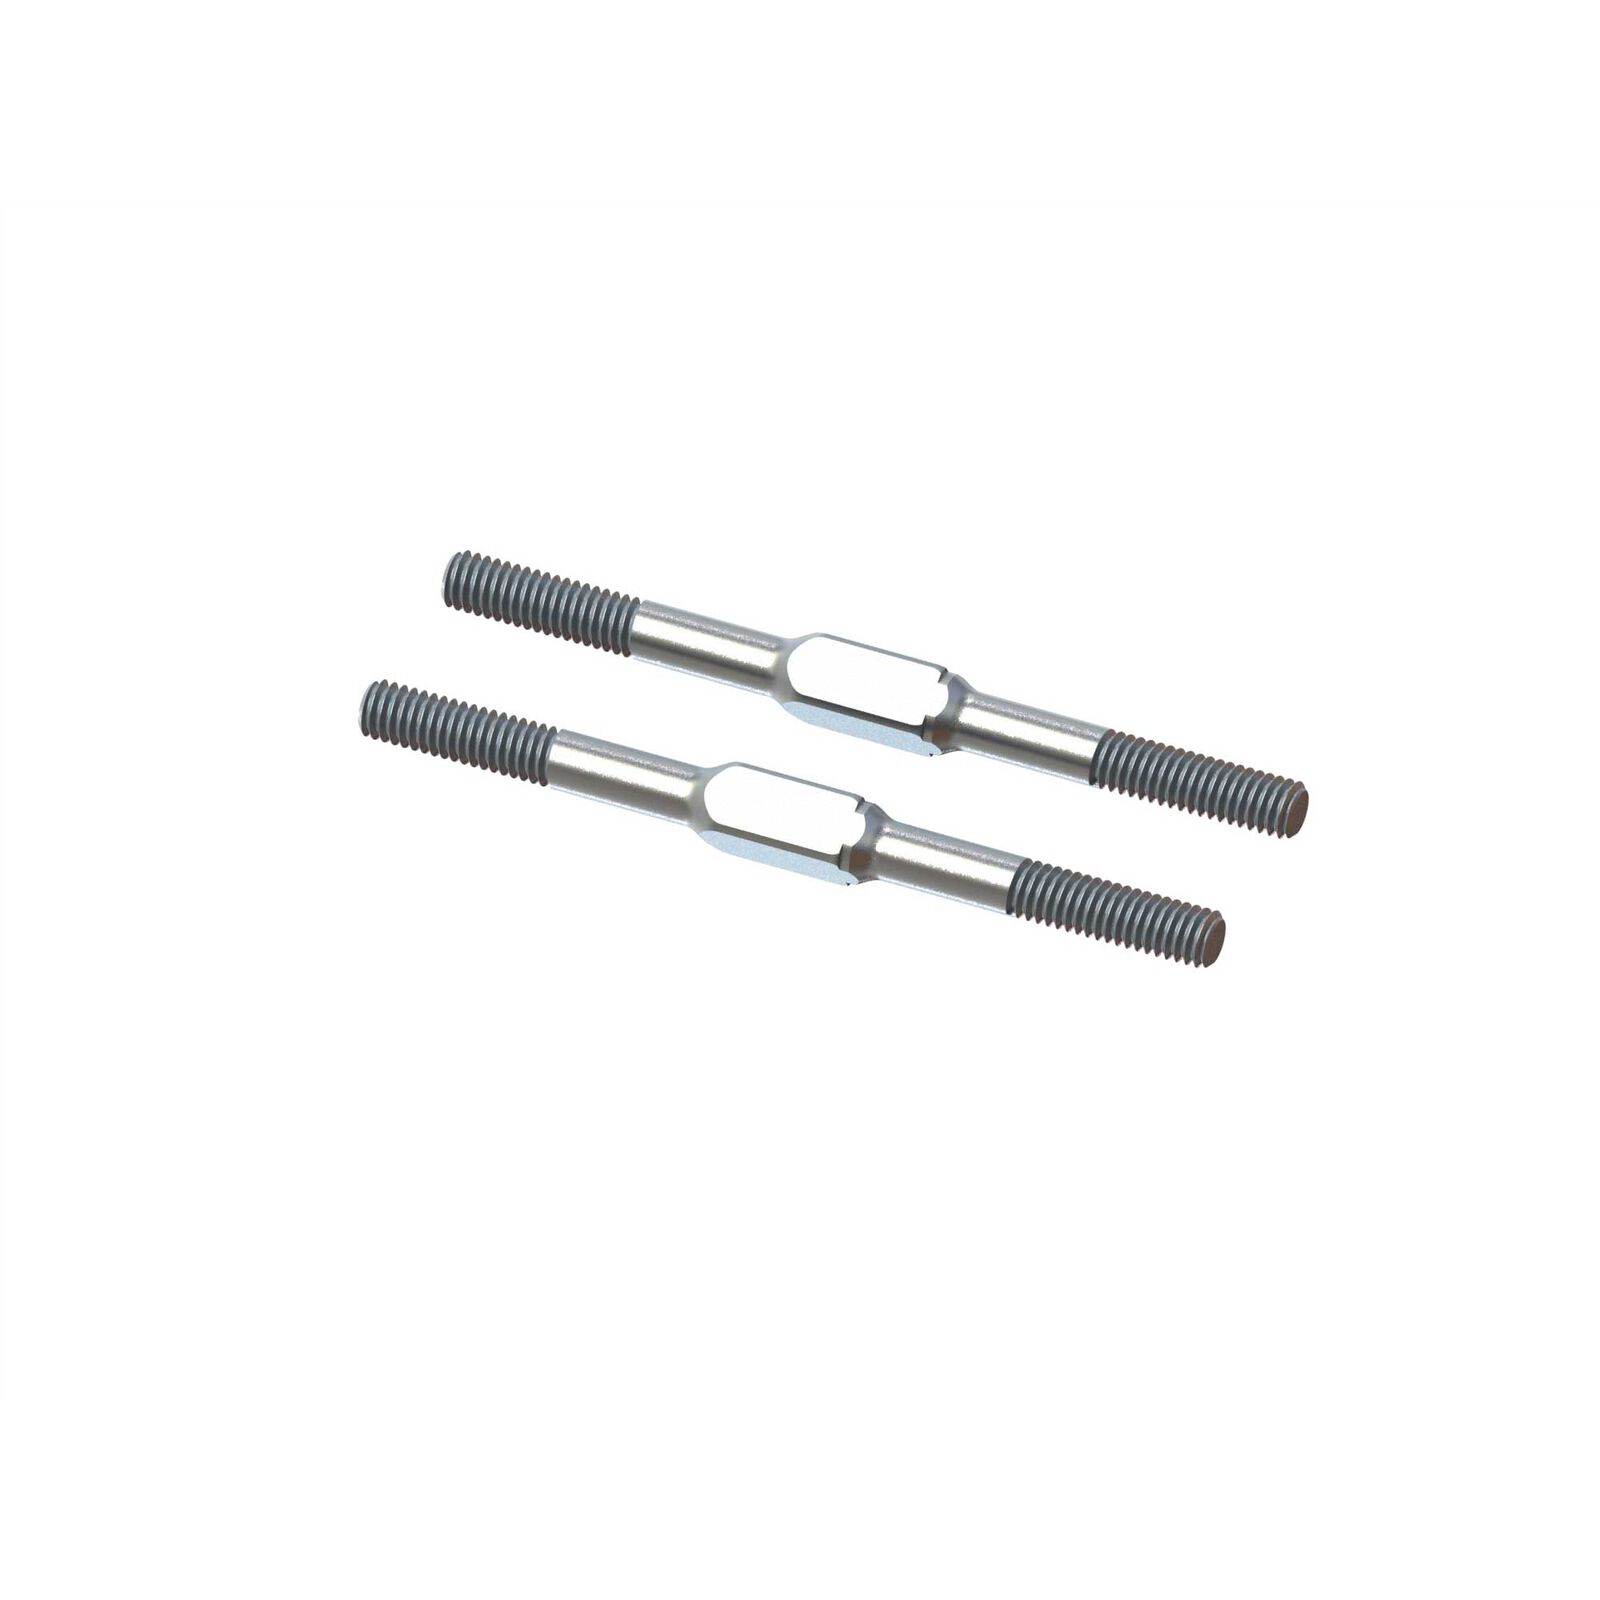 Steel Turnbuckle, M4x60mm Silver (2): EXB